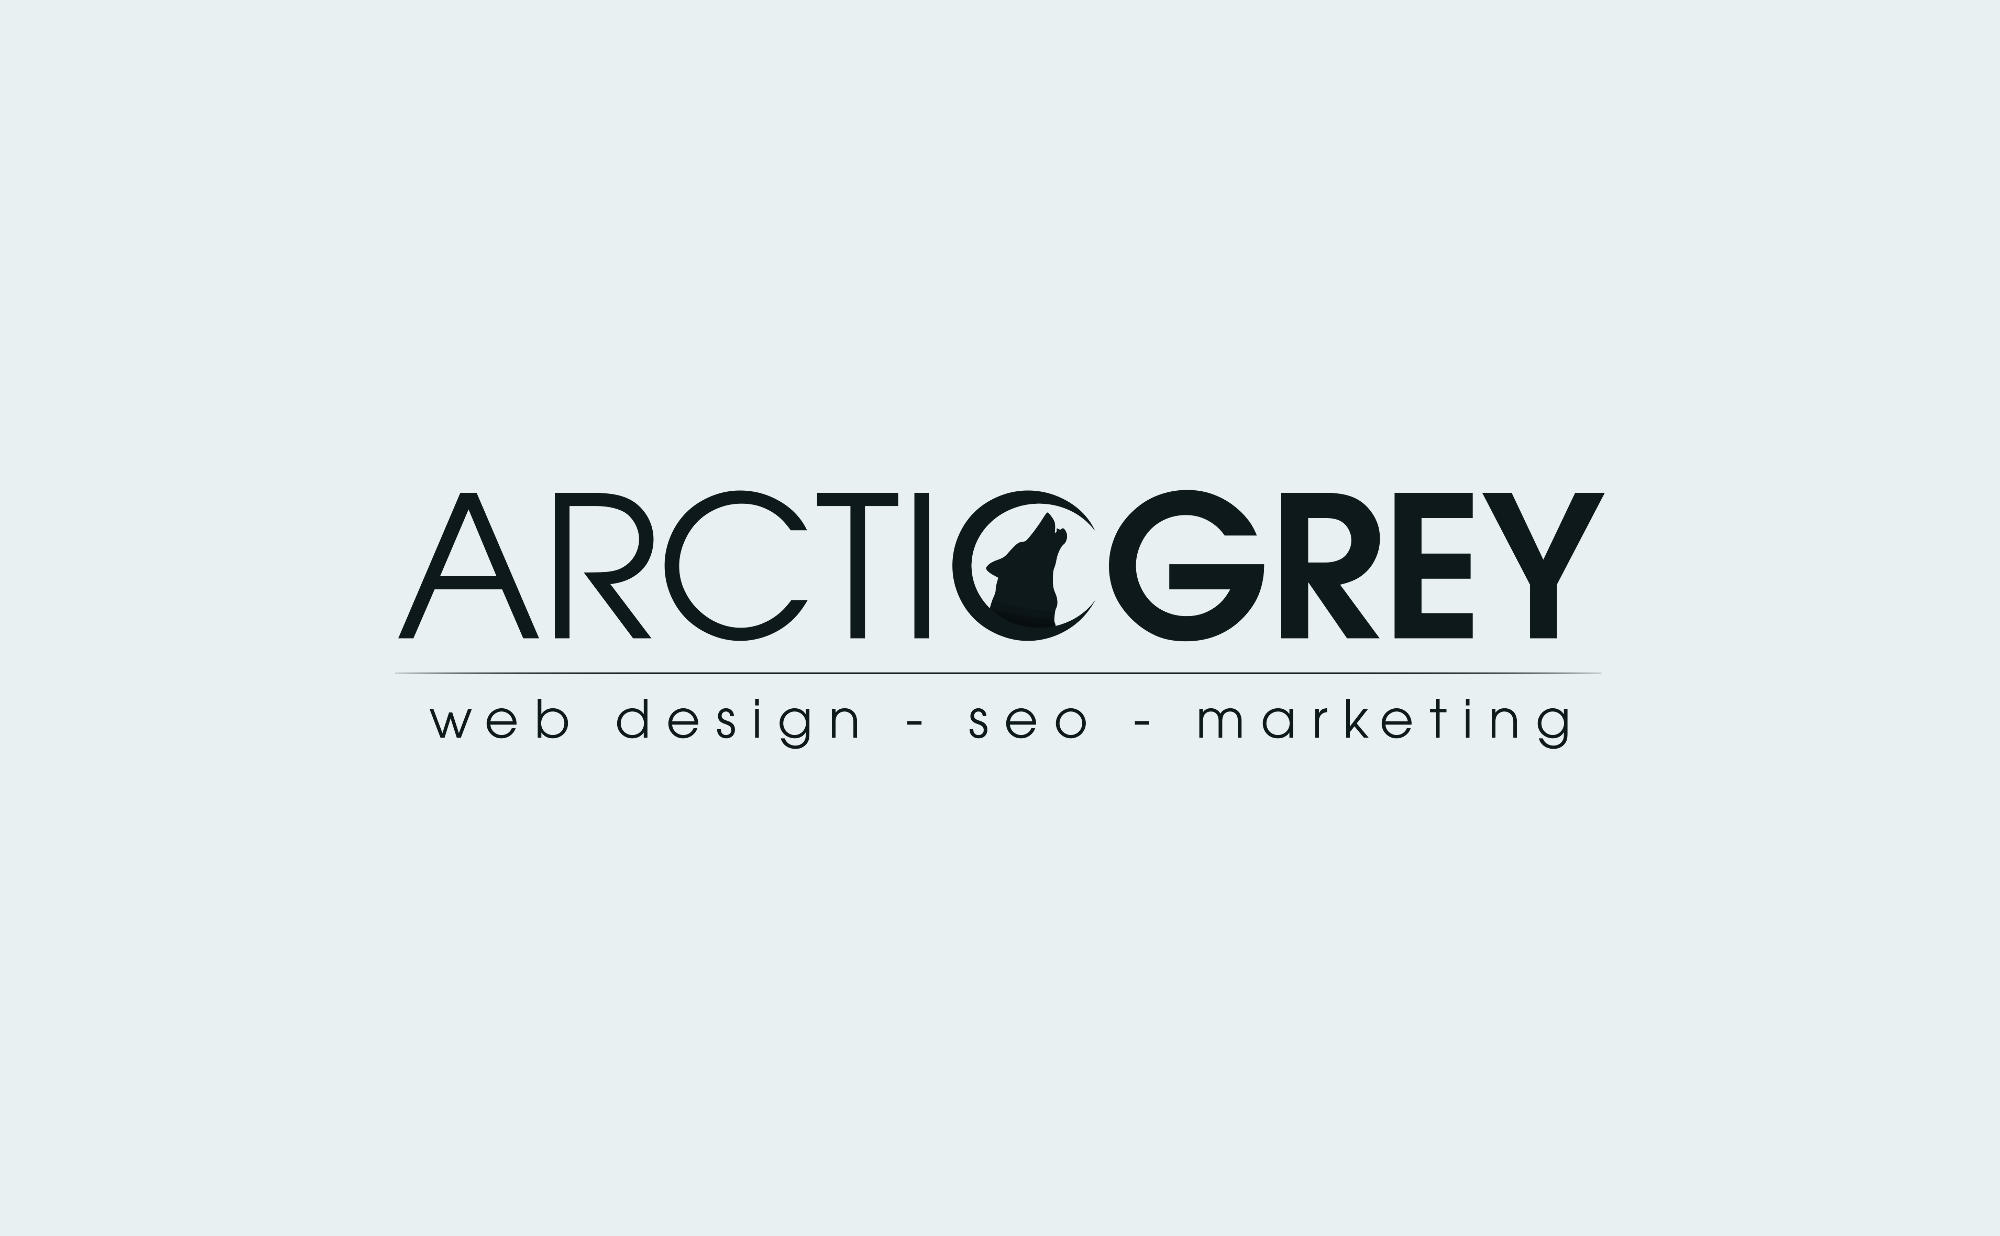 Best SEO Website Design Agency Logo: Arctic Grey Inc